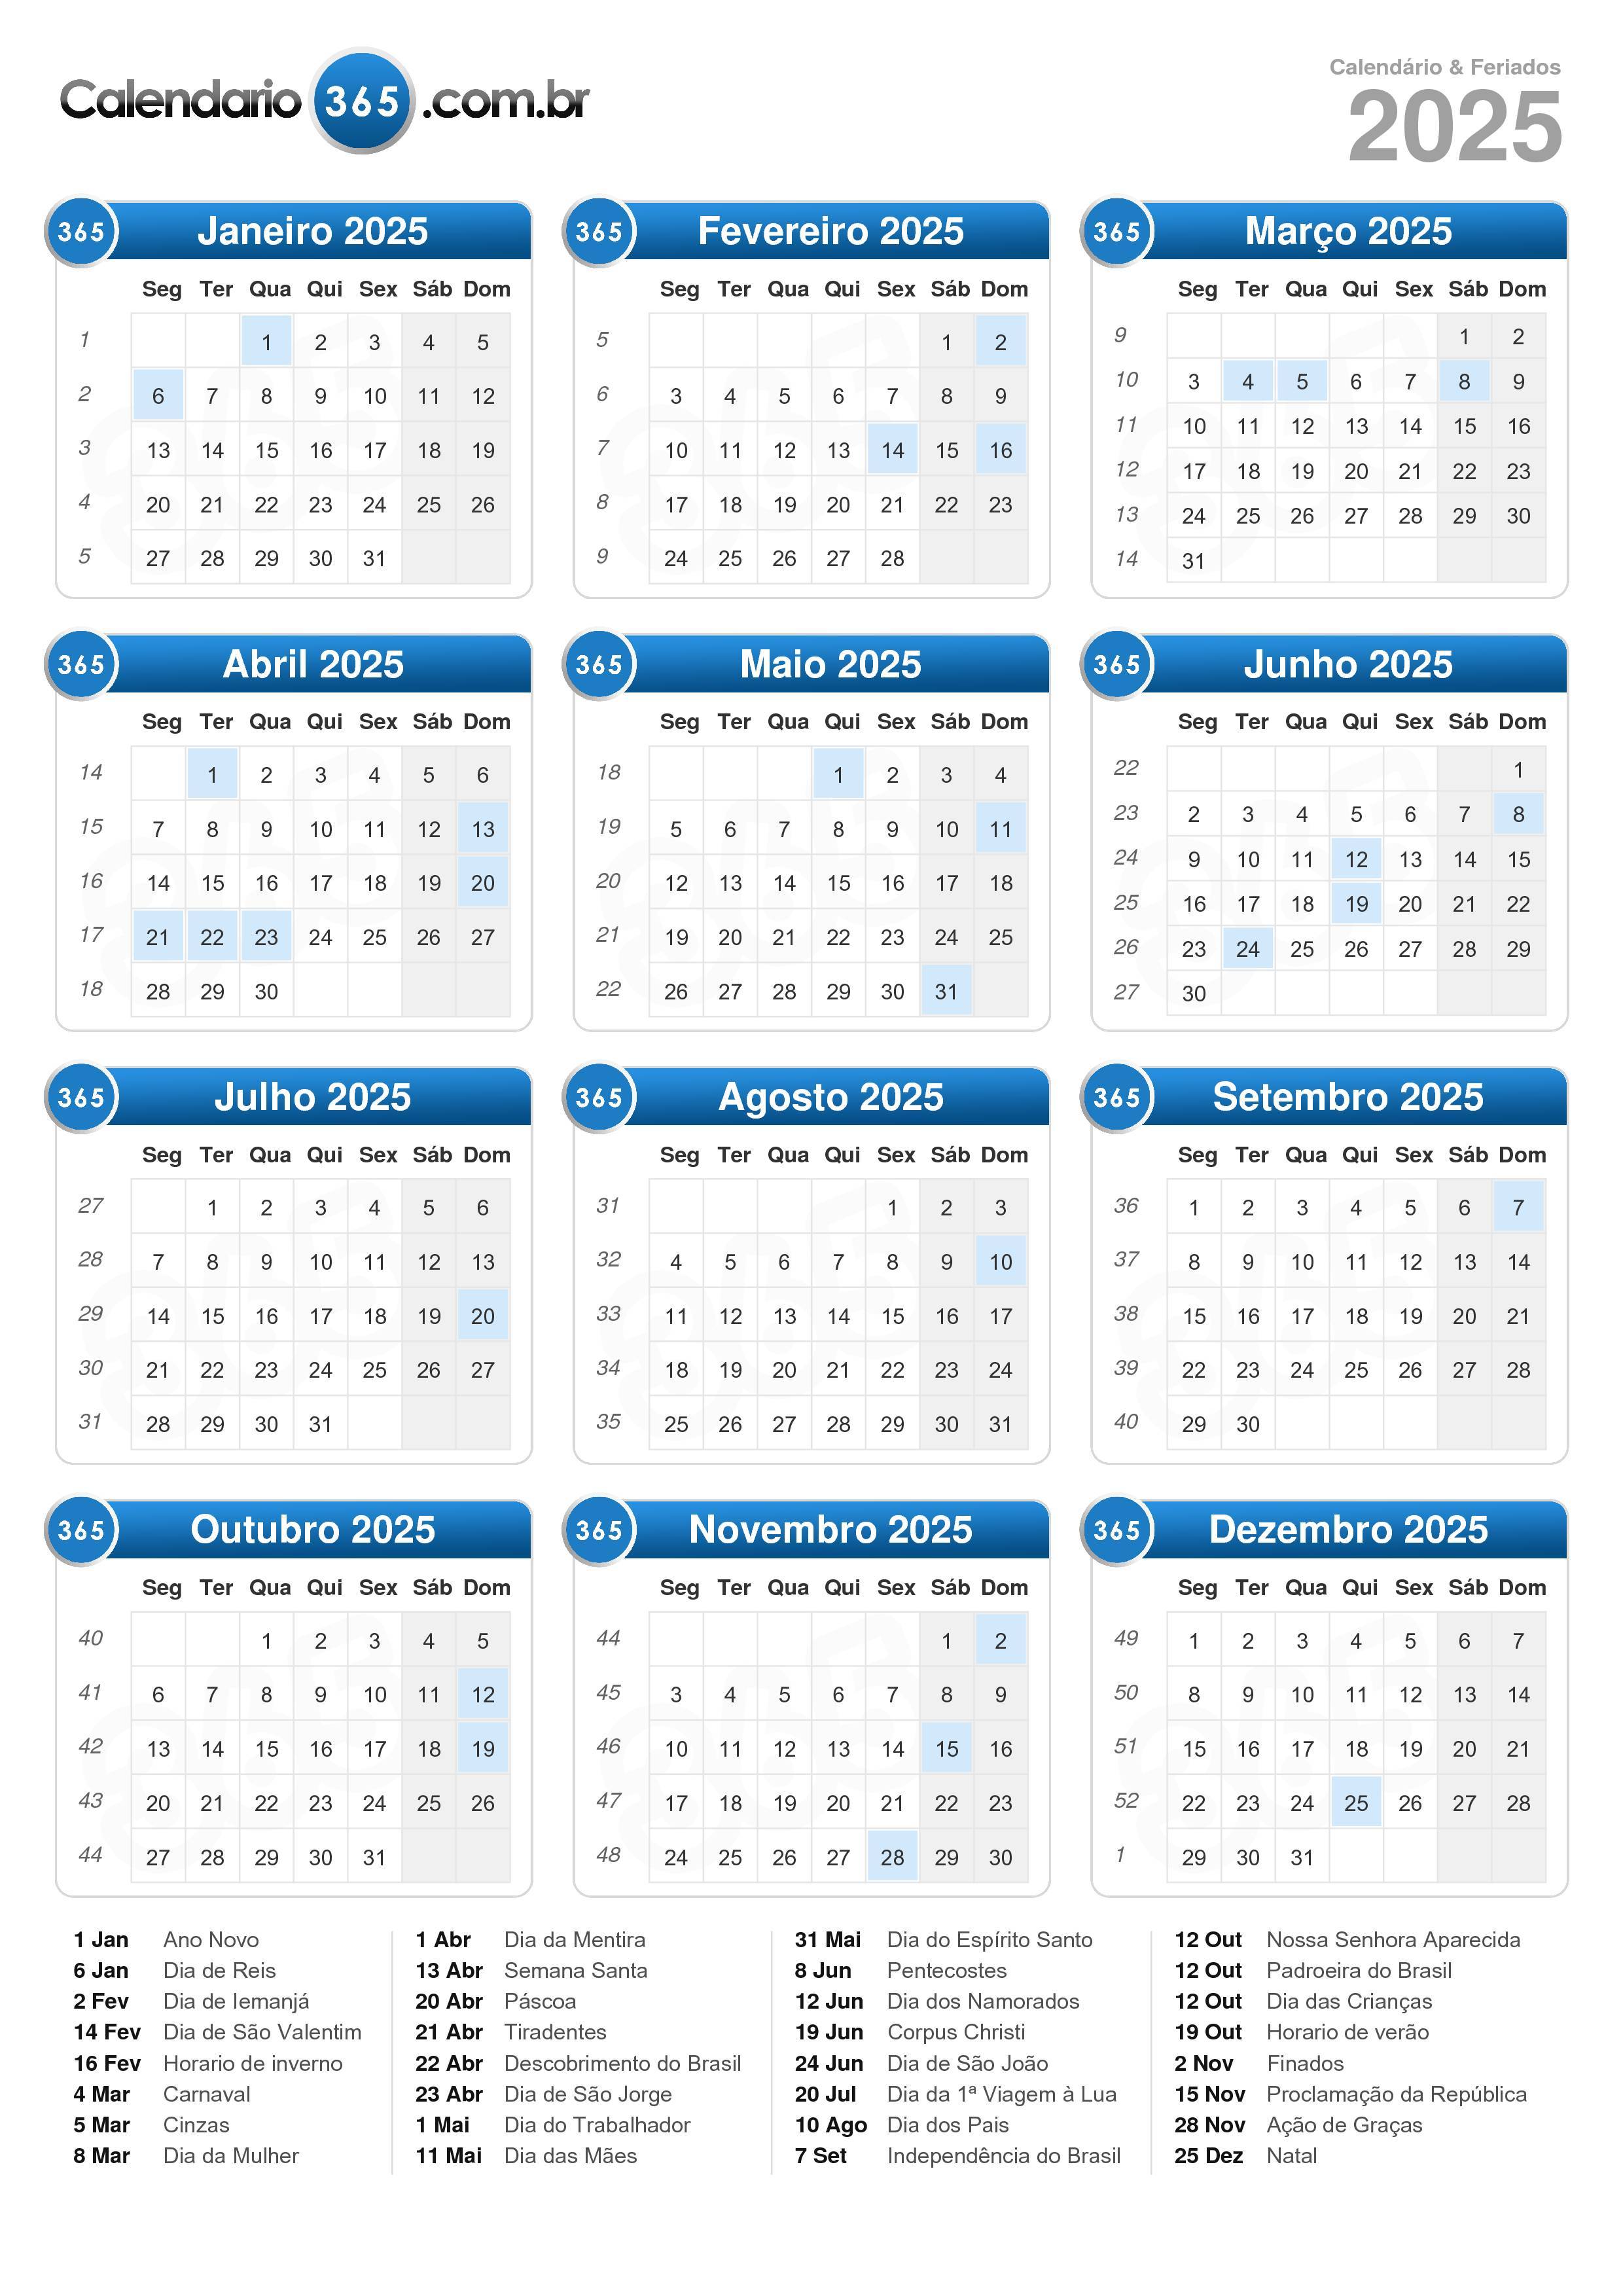 Calendario 2025 Kpmg 